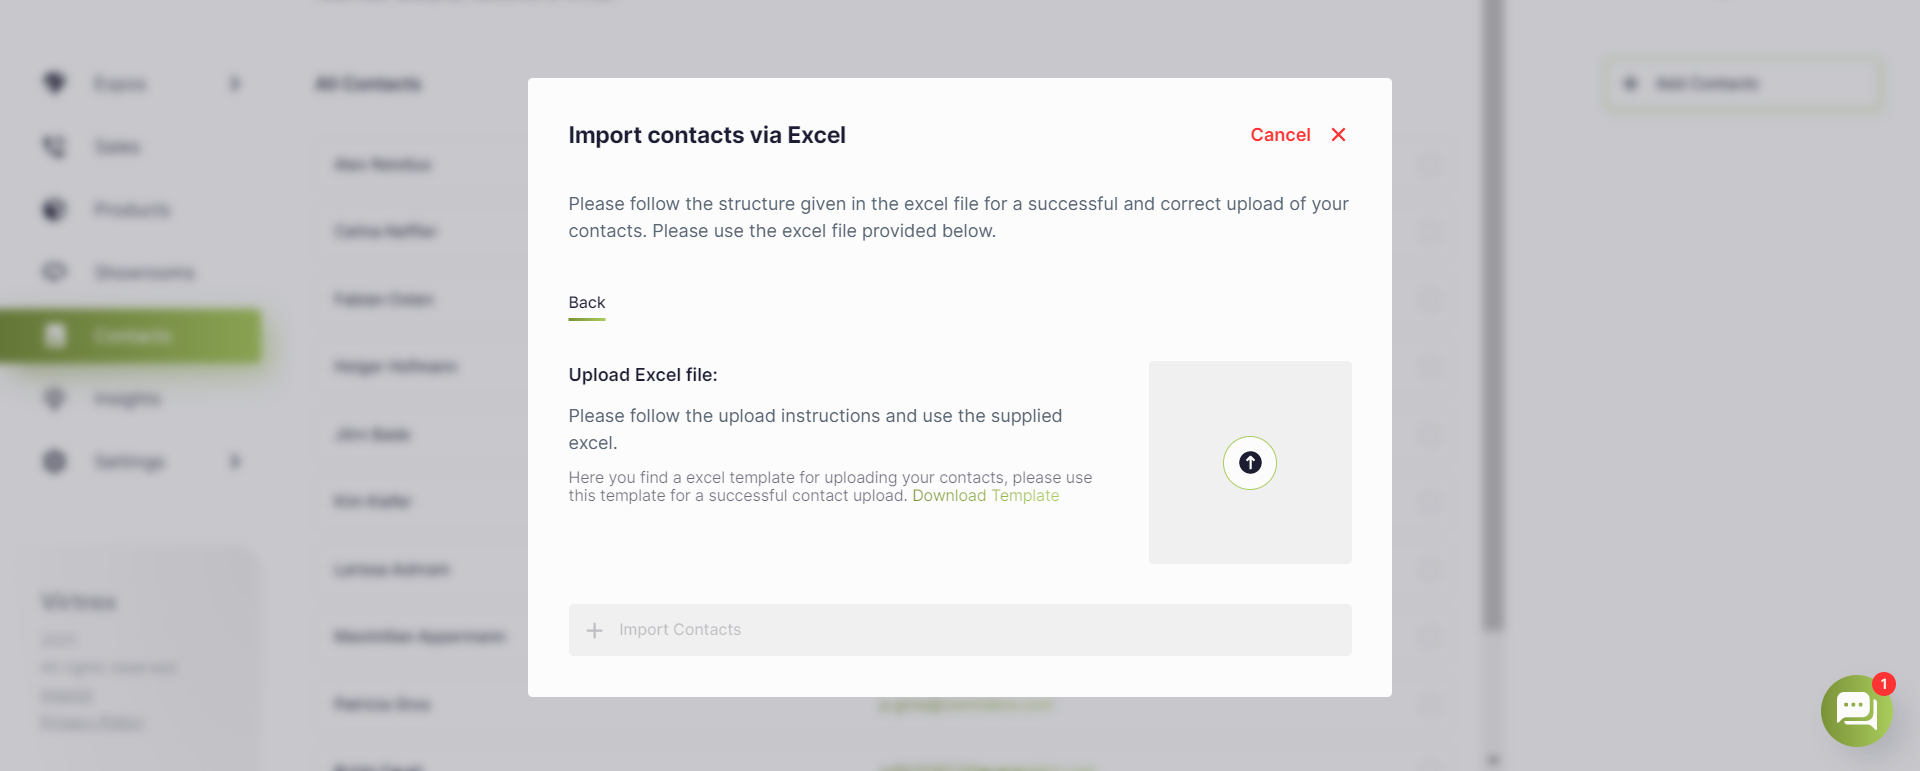 Import contacts via Excel